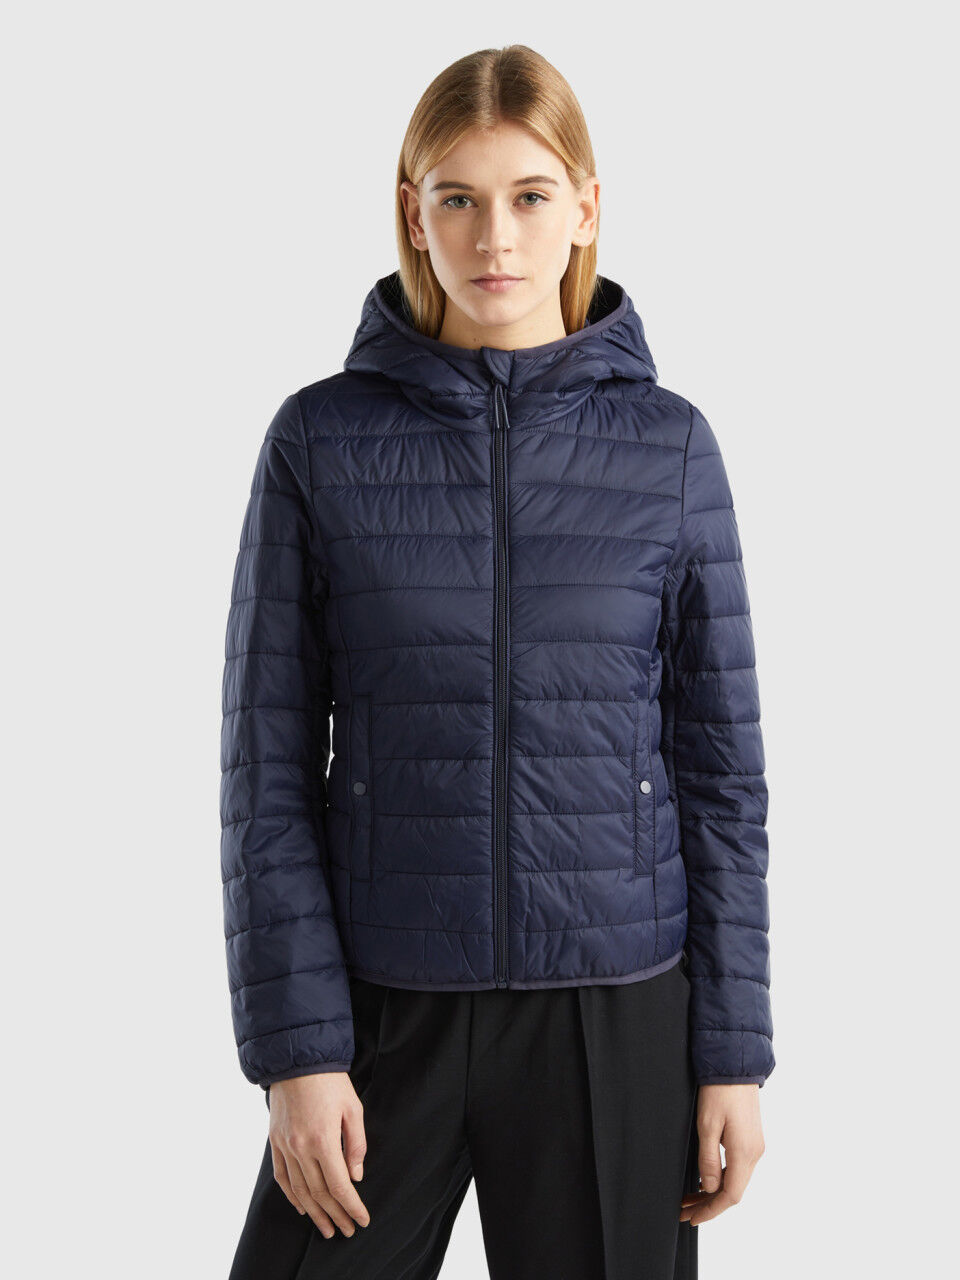 Girls' Humphrey Hills™ Puffer Jacket | Columbia Sportswear